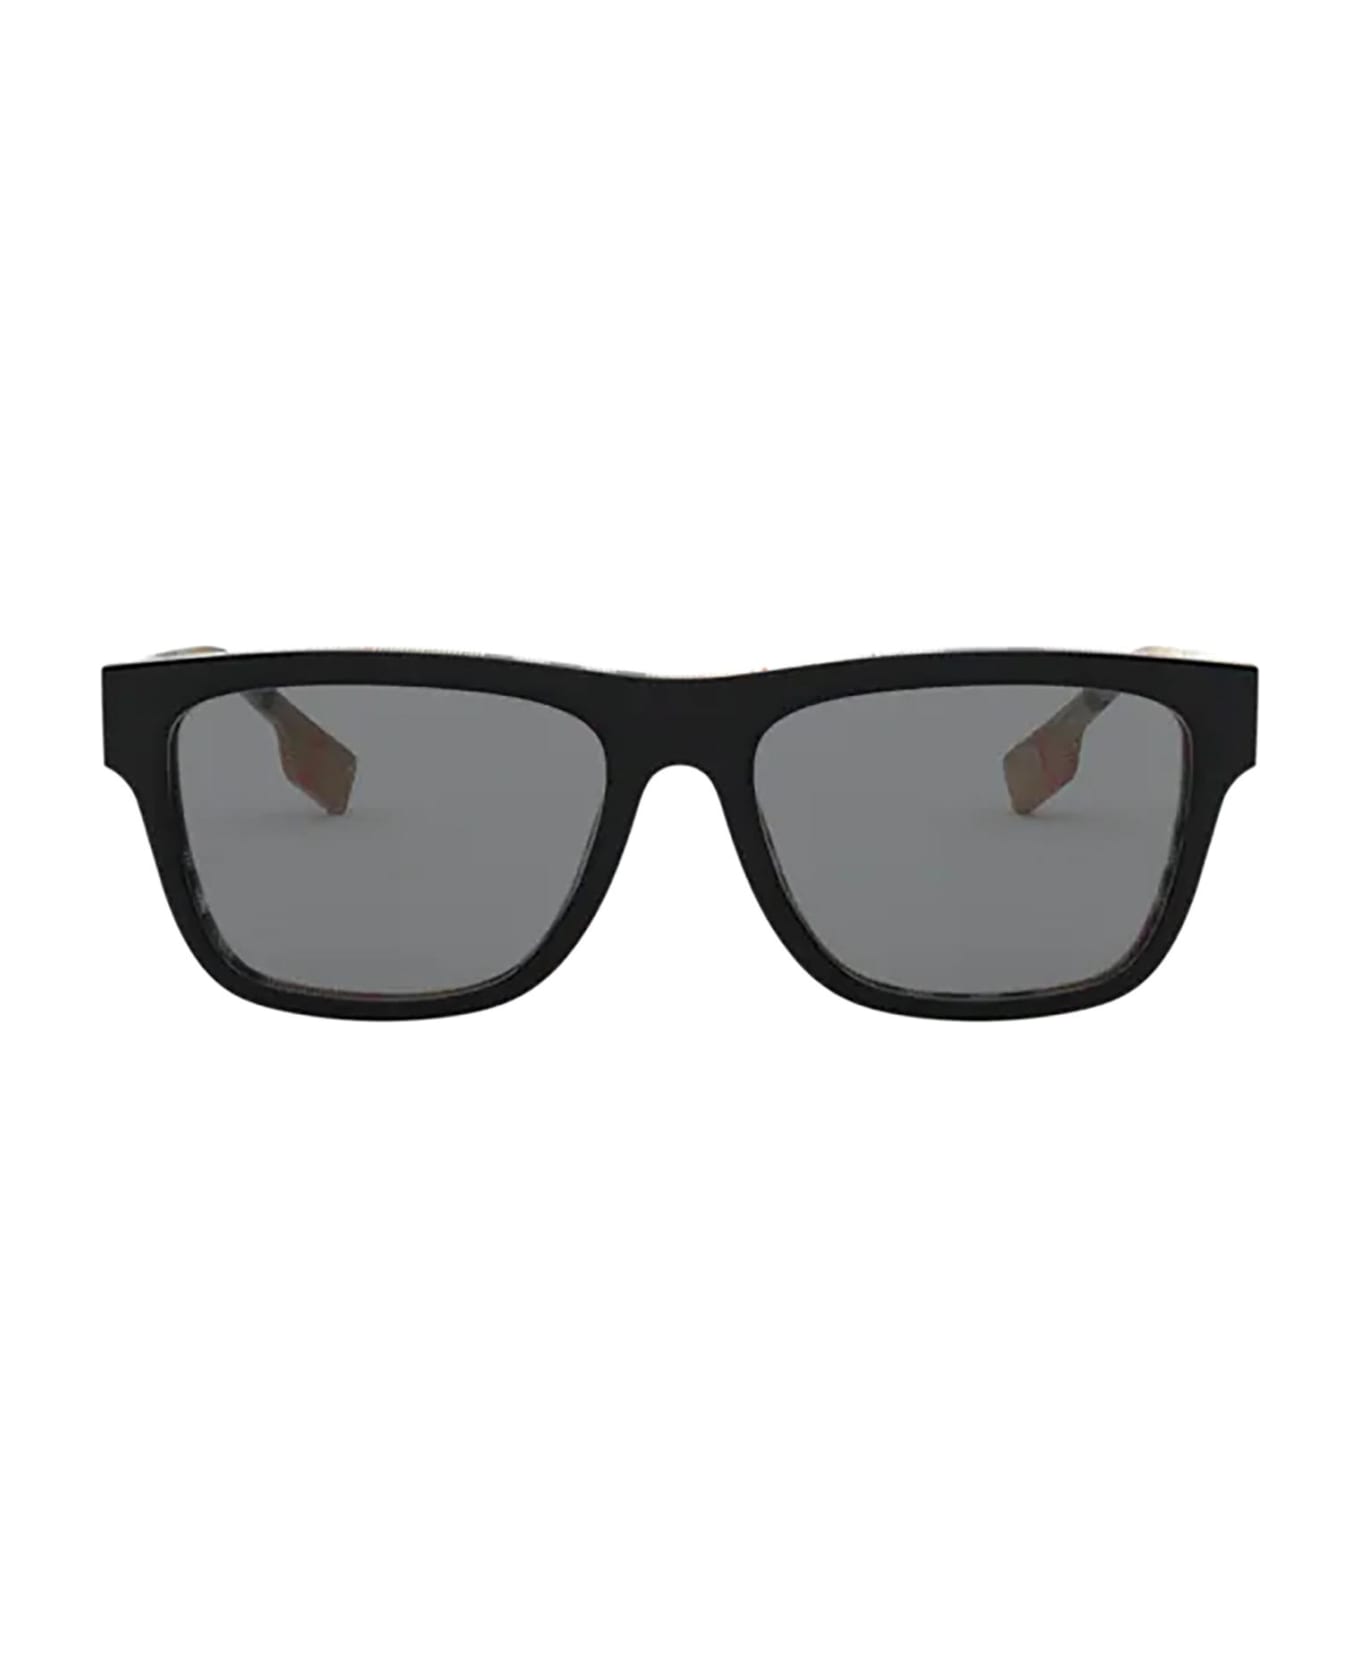 Burberry Eyewear Be4293 Top Black On Vintage Check Sunglasses - Top Black on Vintage Check サングラス